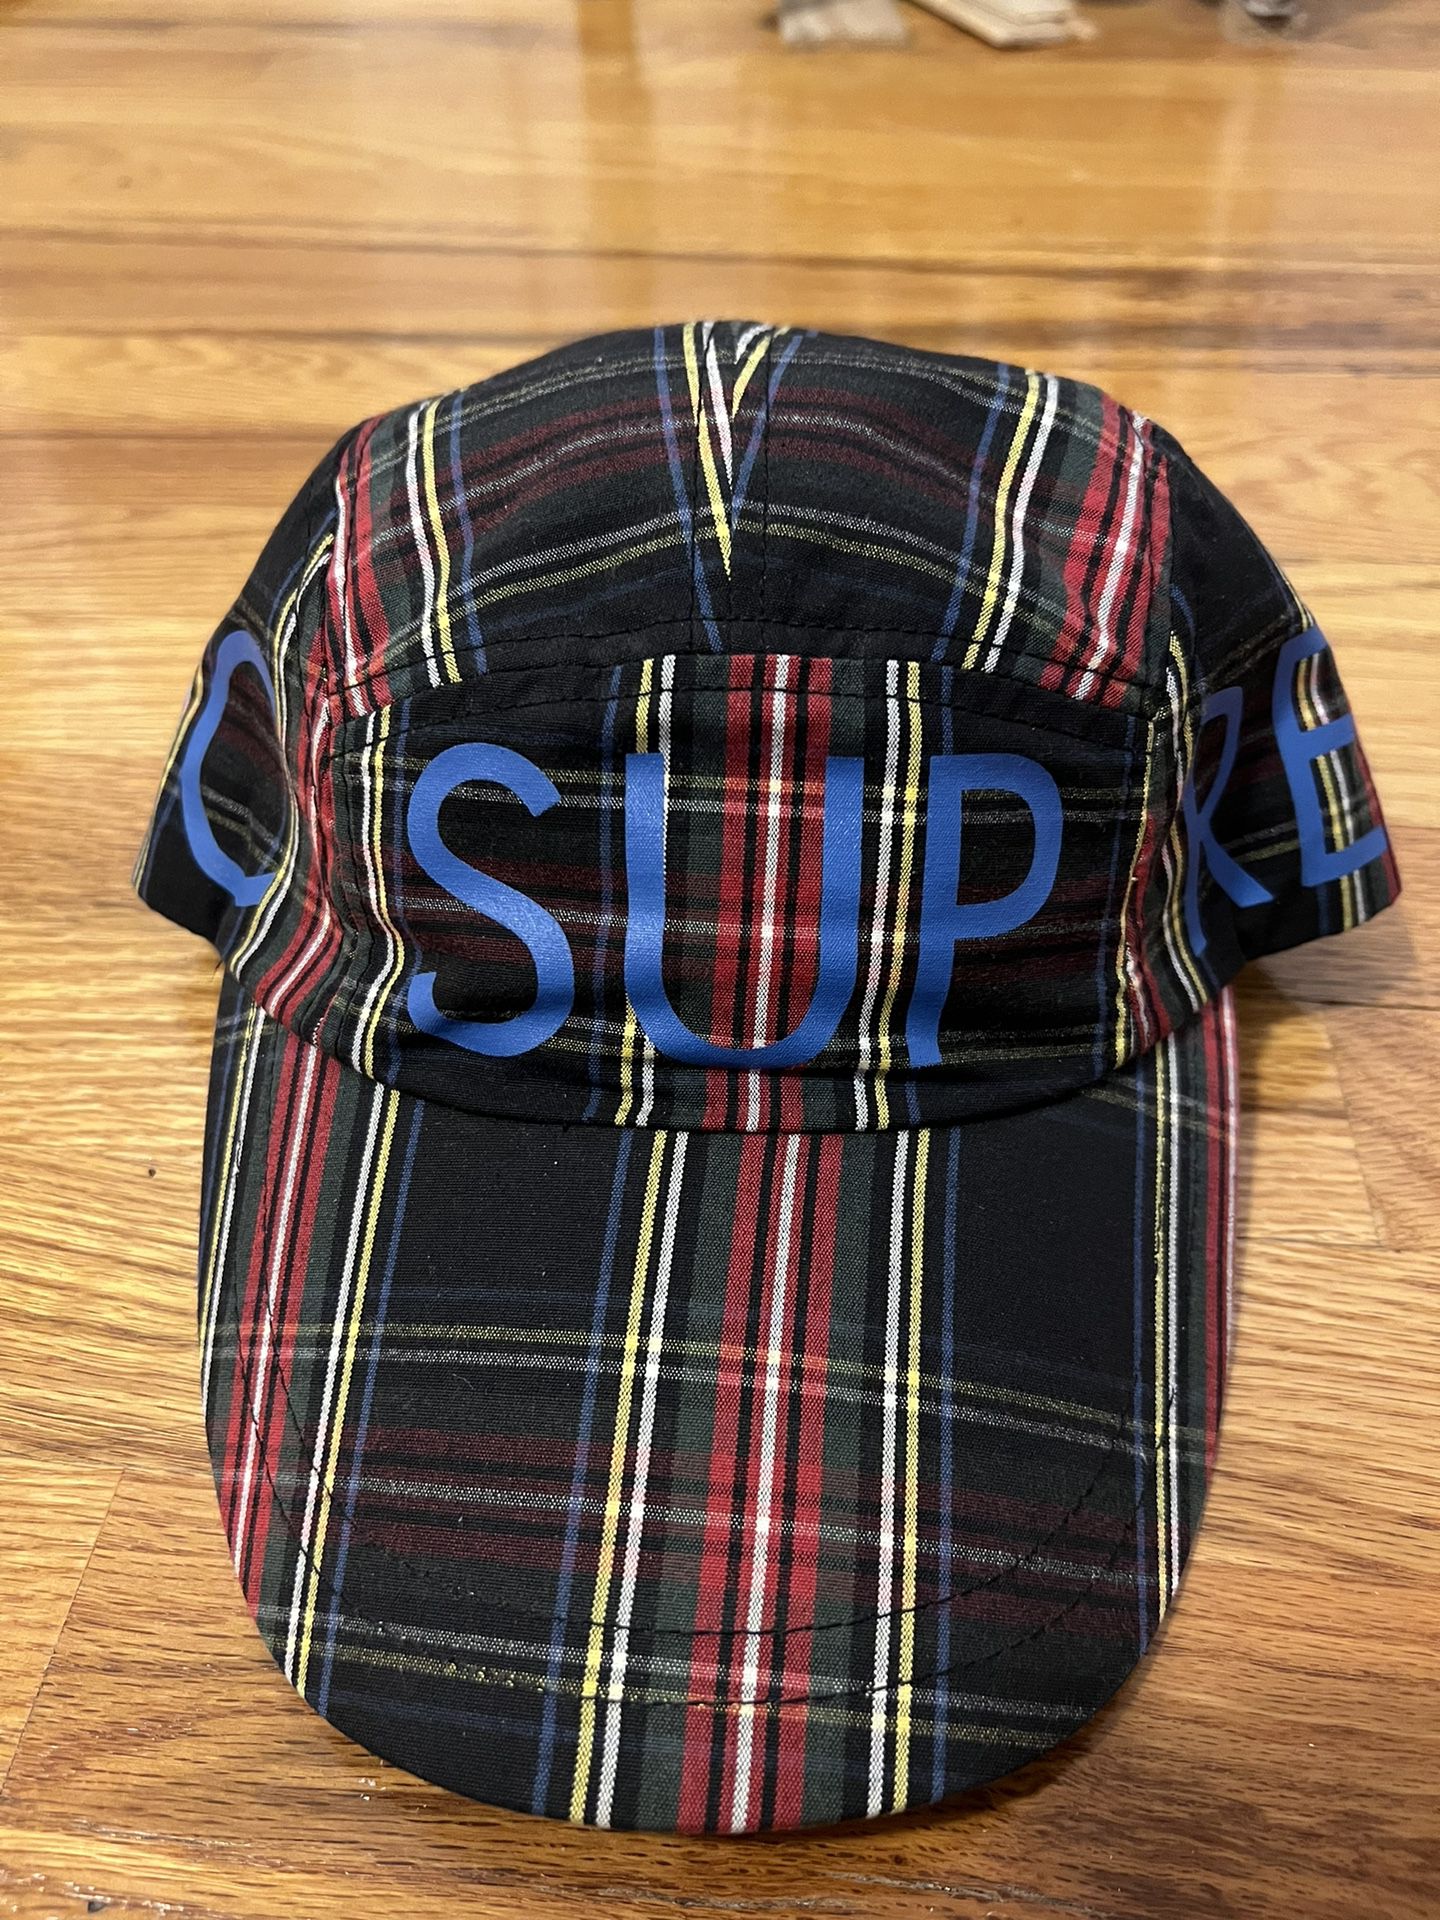 Supreme X Louis Vuitton Hat for Sale in Greenville, RI - OfferUp